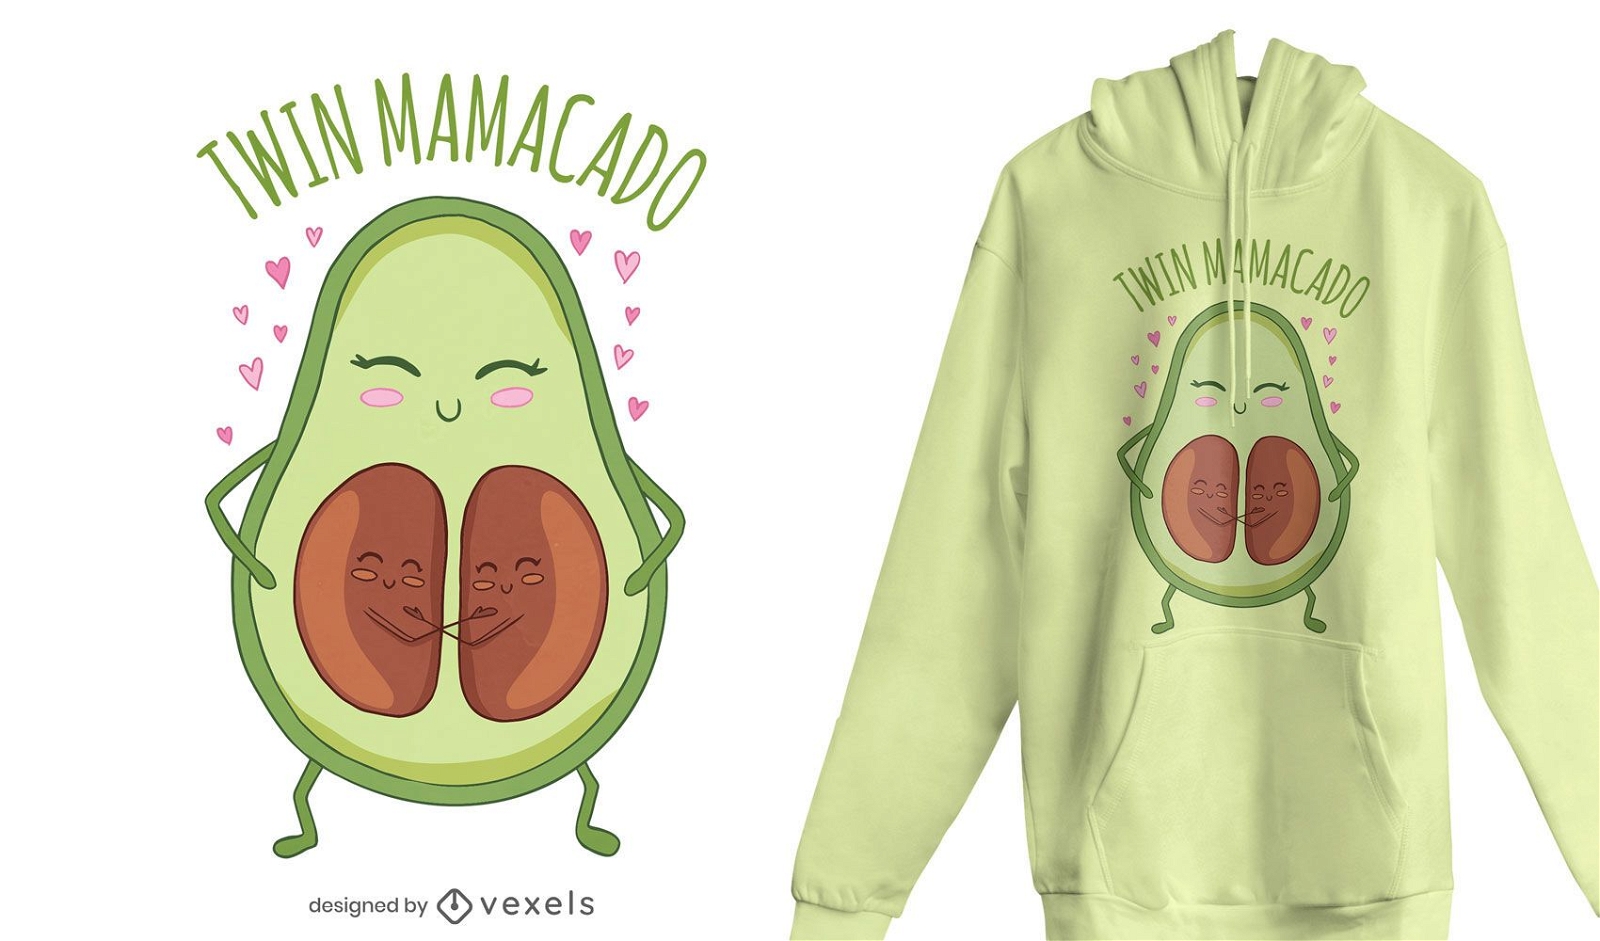 Twin Mamacado T-Shirt Design